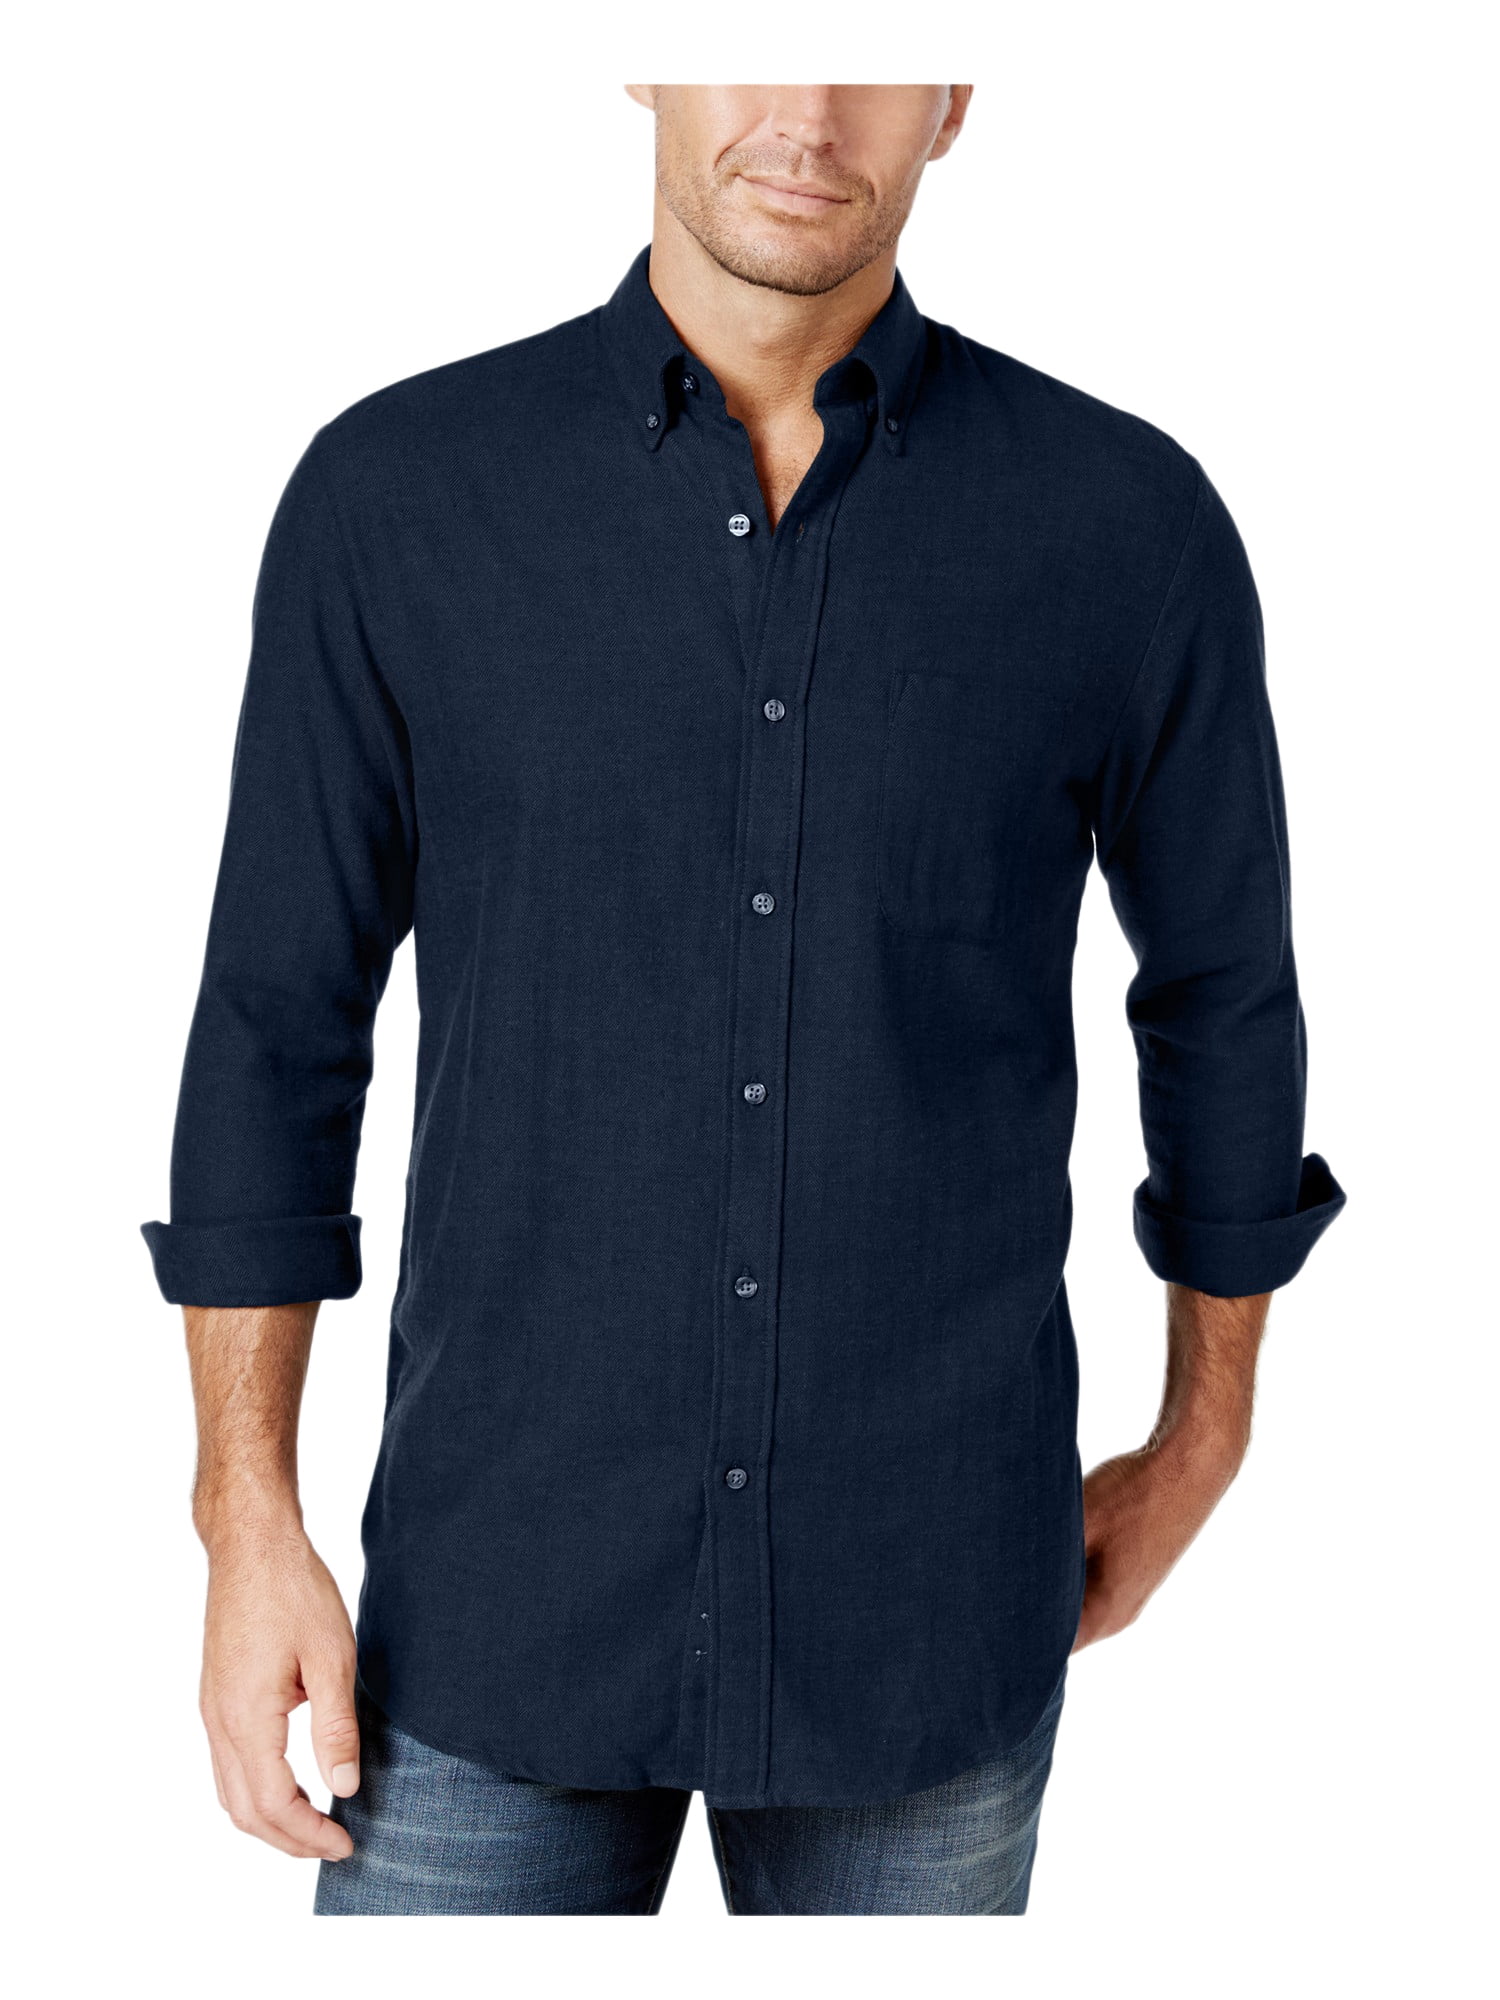 John Ashford Mens Herringbone LS Button Up Shirt, Blue, Small - Walmart.com